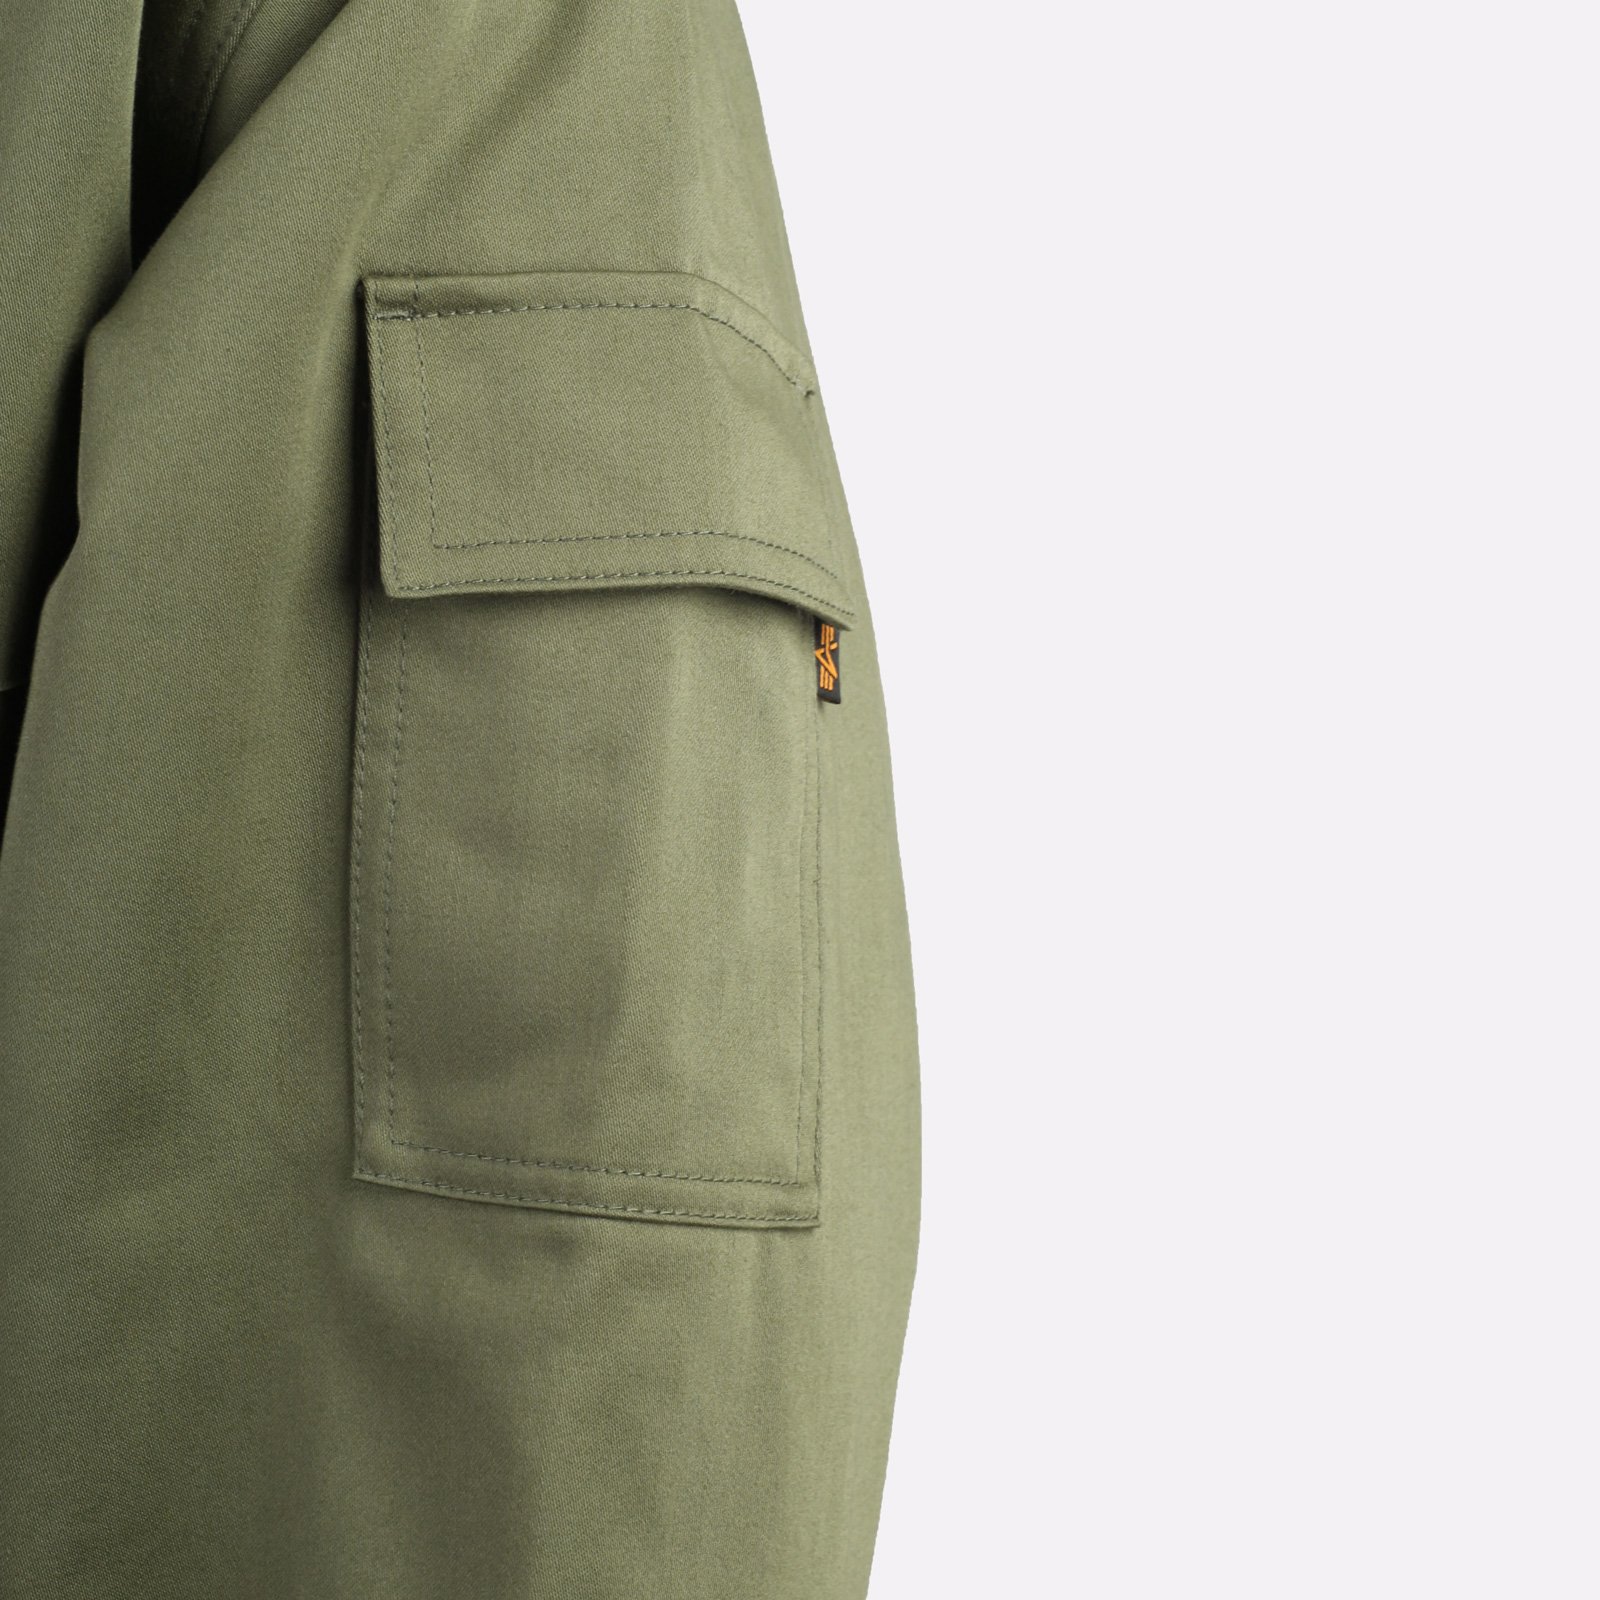 мужская куртка Alpha Industries M1934 Jacket Mod  (MJM53500C1-green)  - цена, описание, фото 7